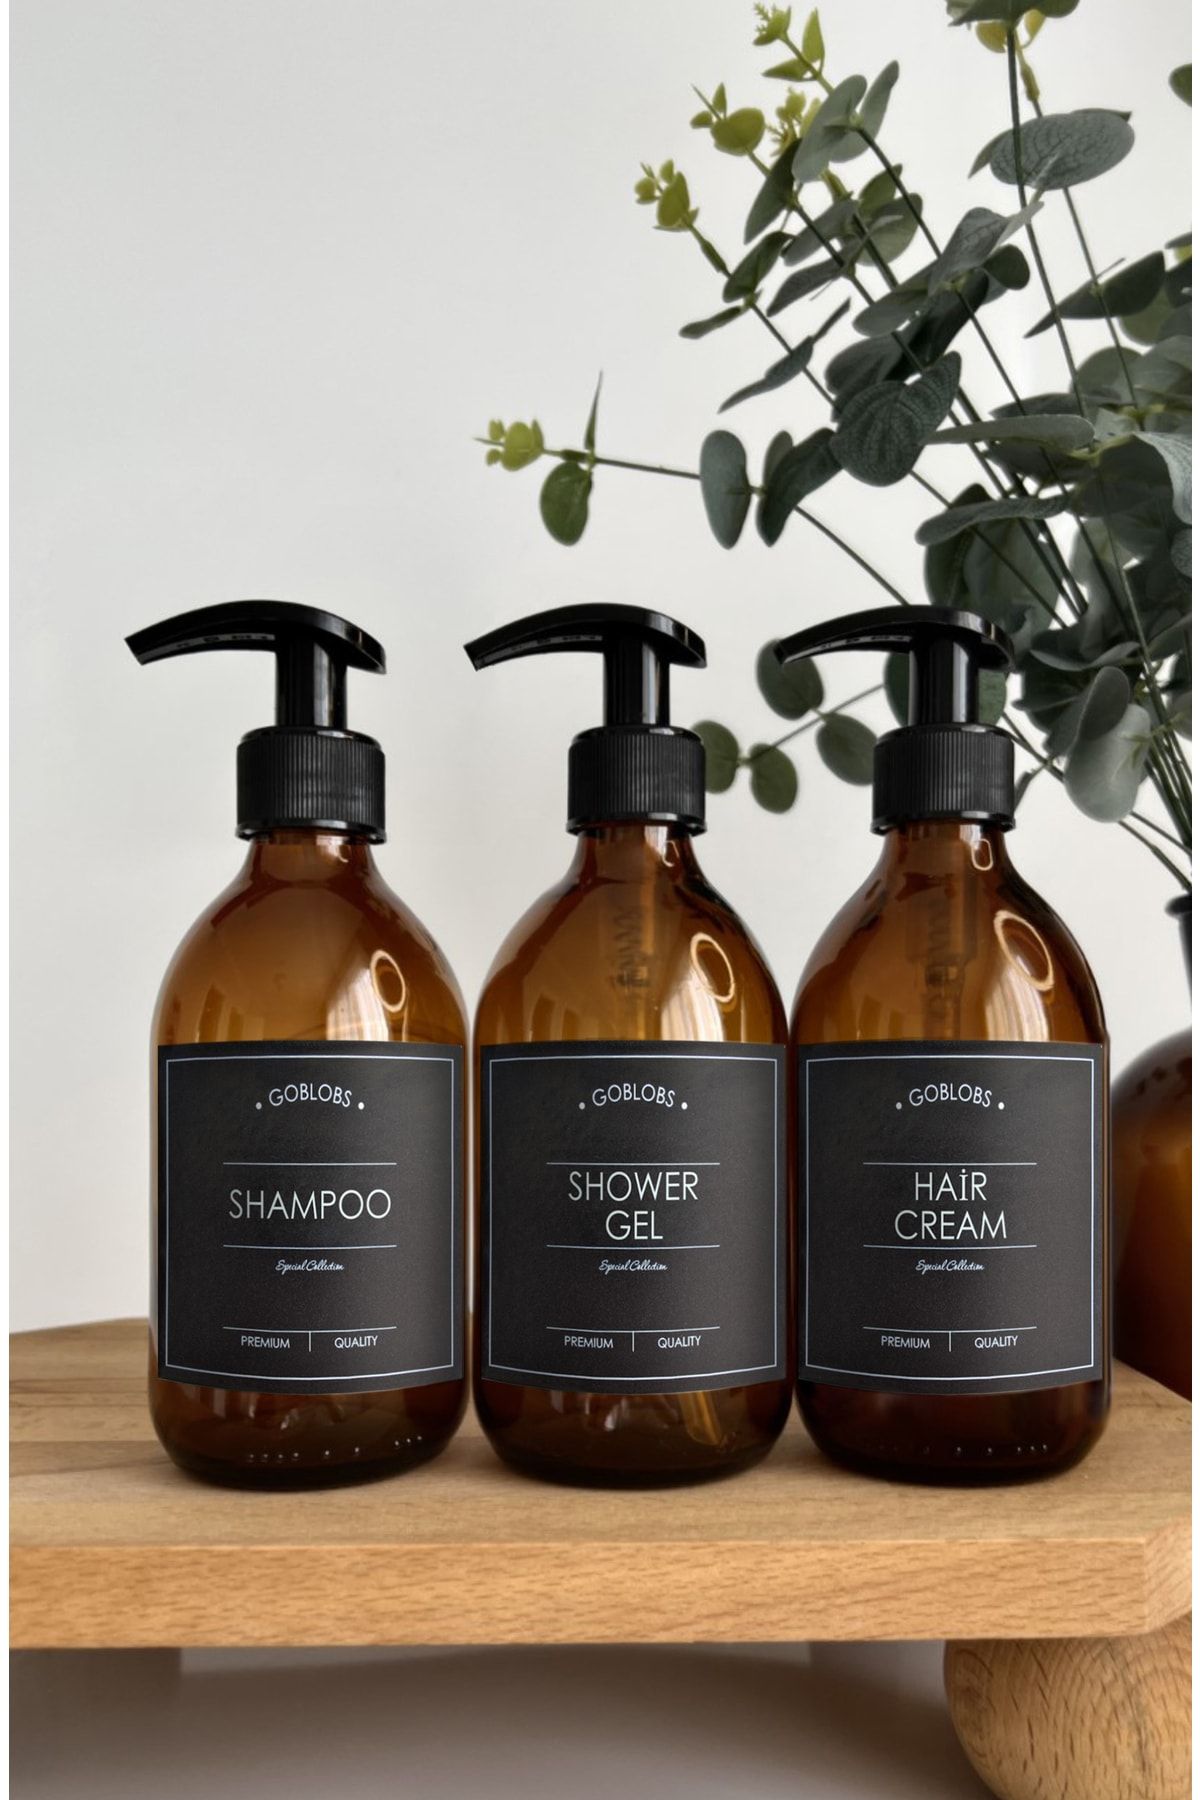 GO BLOBS 3'lü Set 300ml Amber Şişe Shampoo & Shower Gel & Hair Cream Siyah